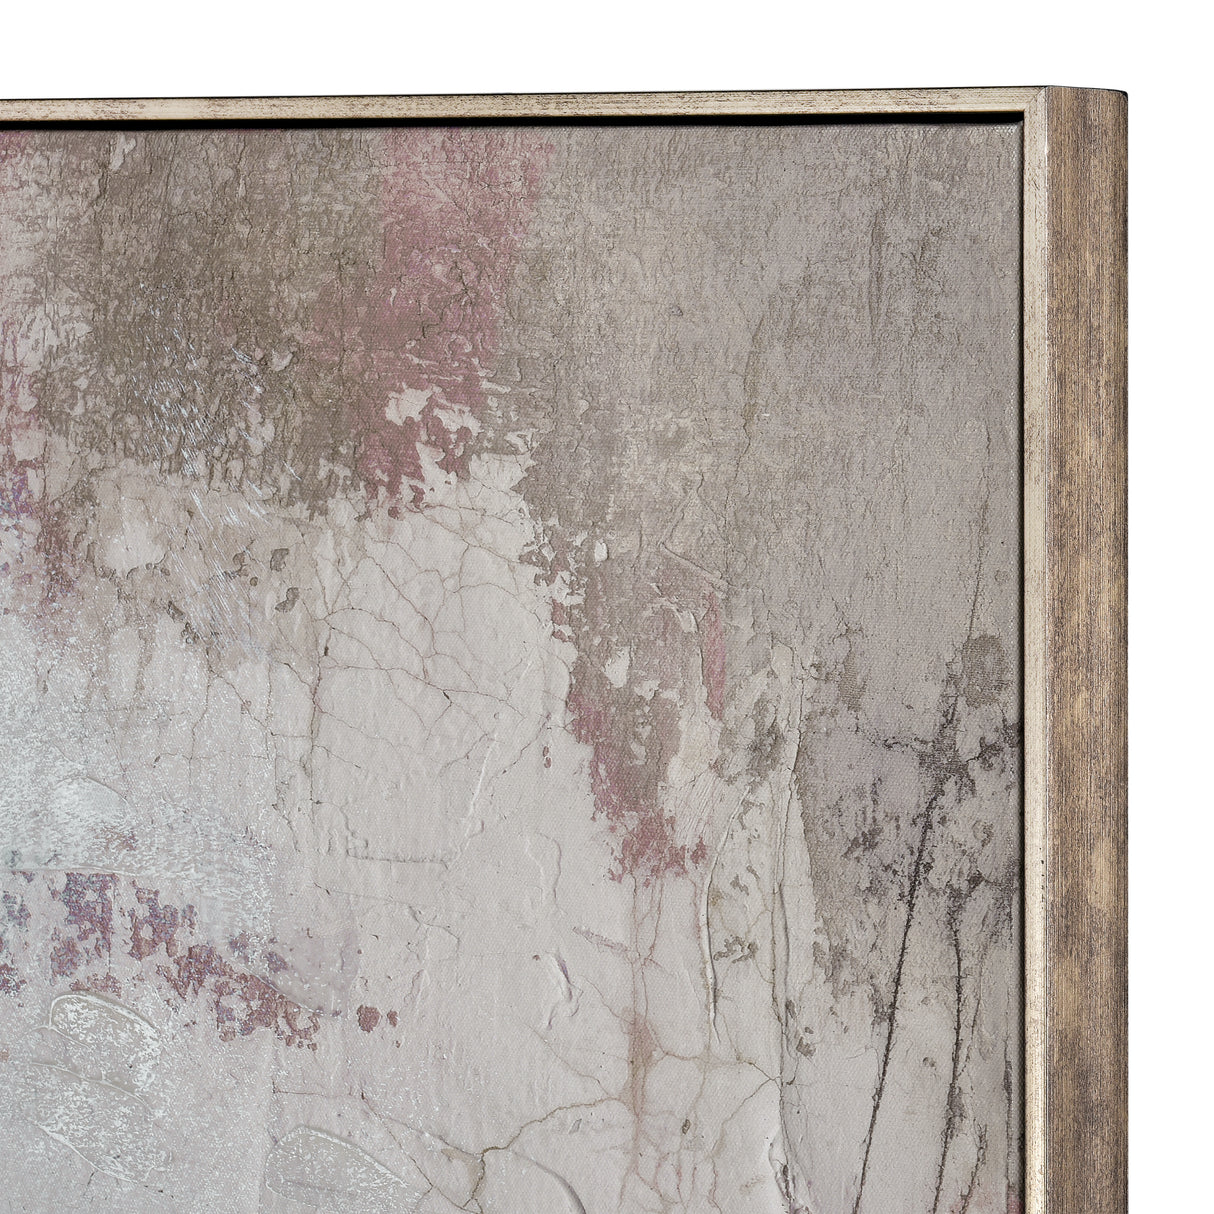 Elk S0056-10621 Kinetic Abstract Framed Wall Art